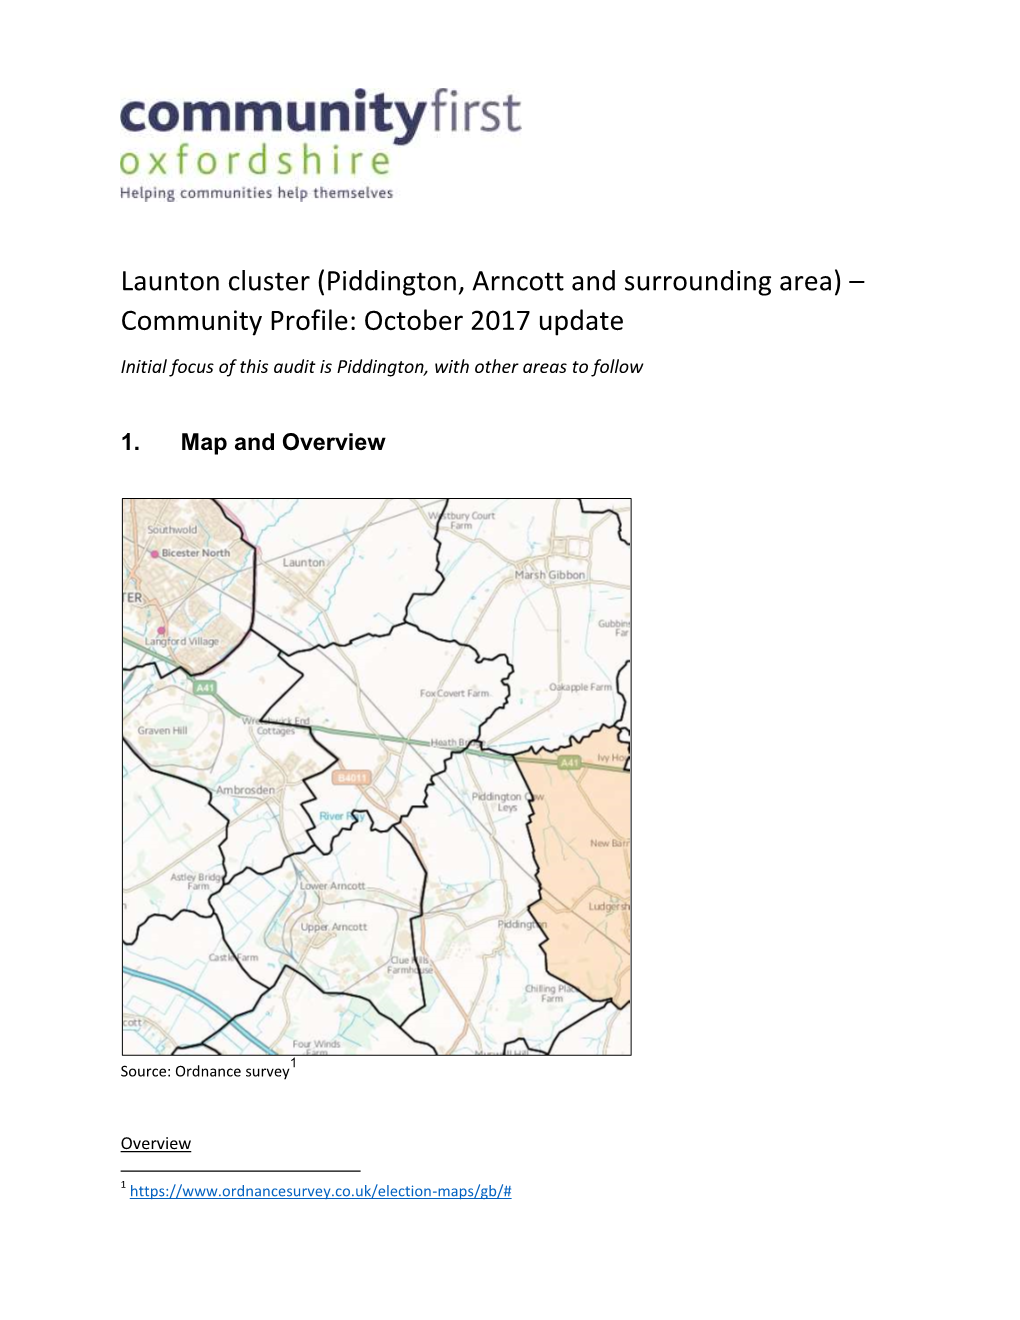 Launton Cluster (Piddington, Arncott and Surrounding Area) – Community Profile: October 2017 Update